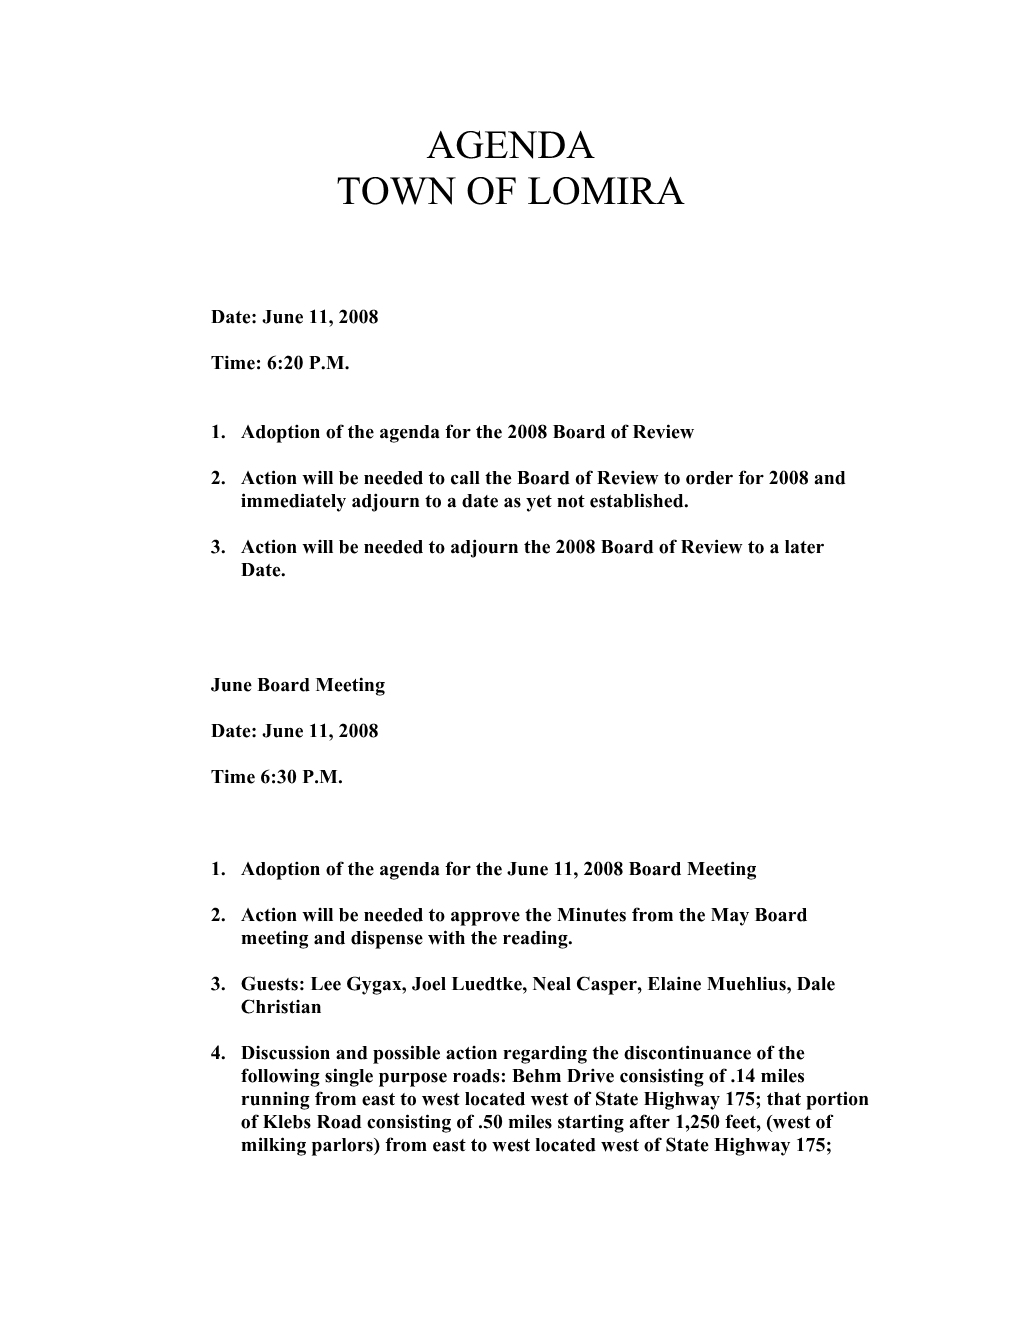 Town of Lomira